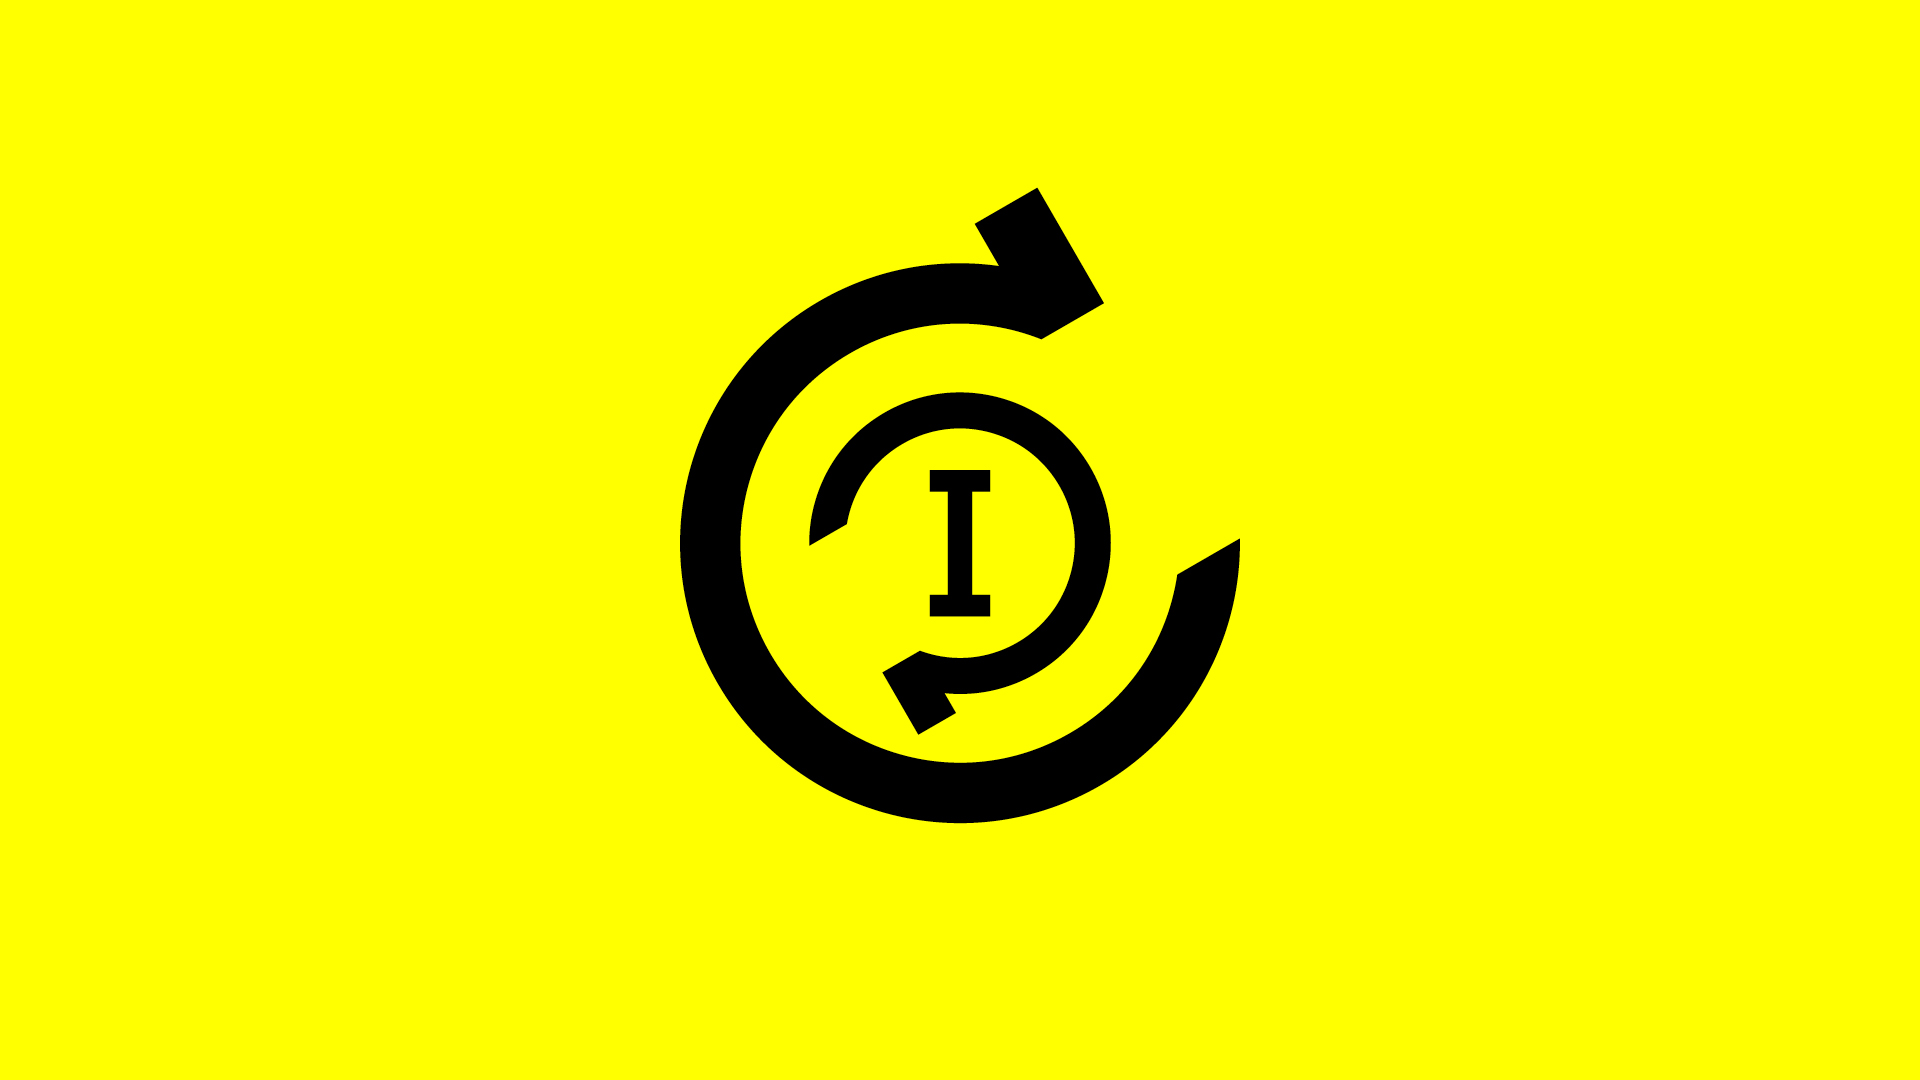 CIC's Symbol Mark